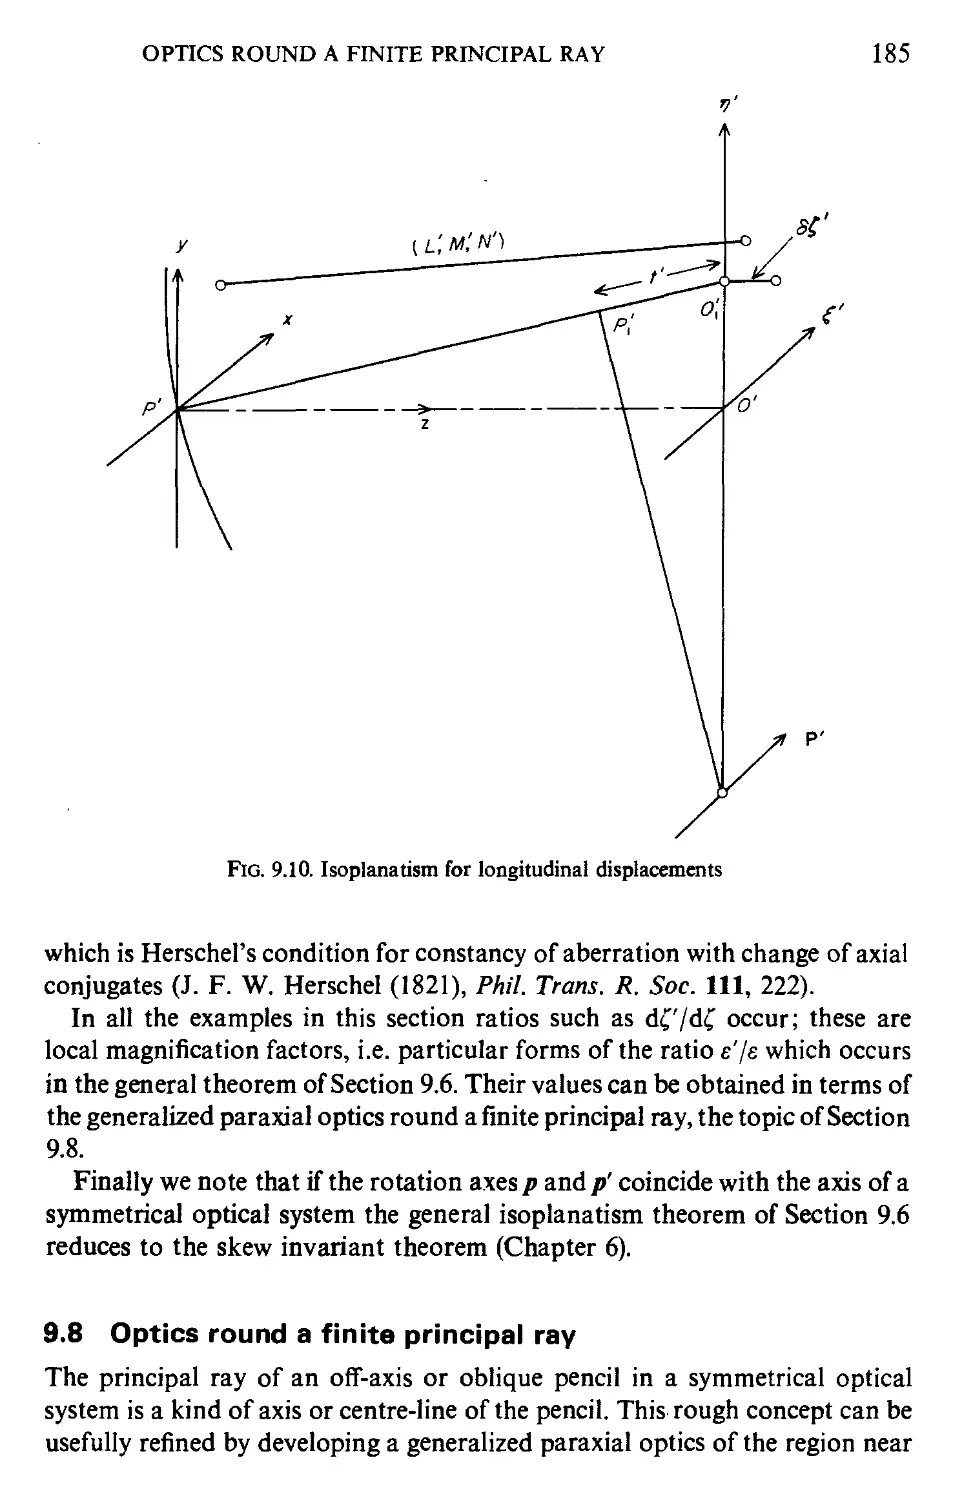 9.8 Optics round a finite principal ray